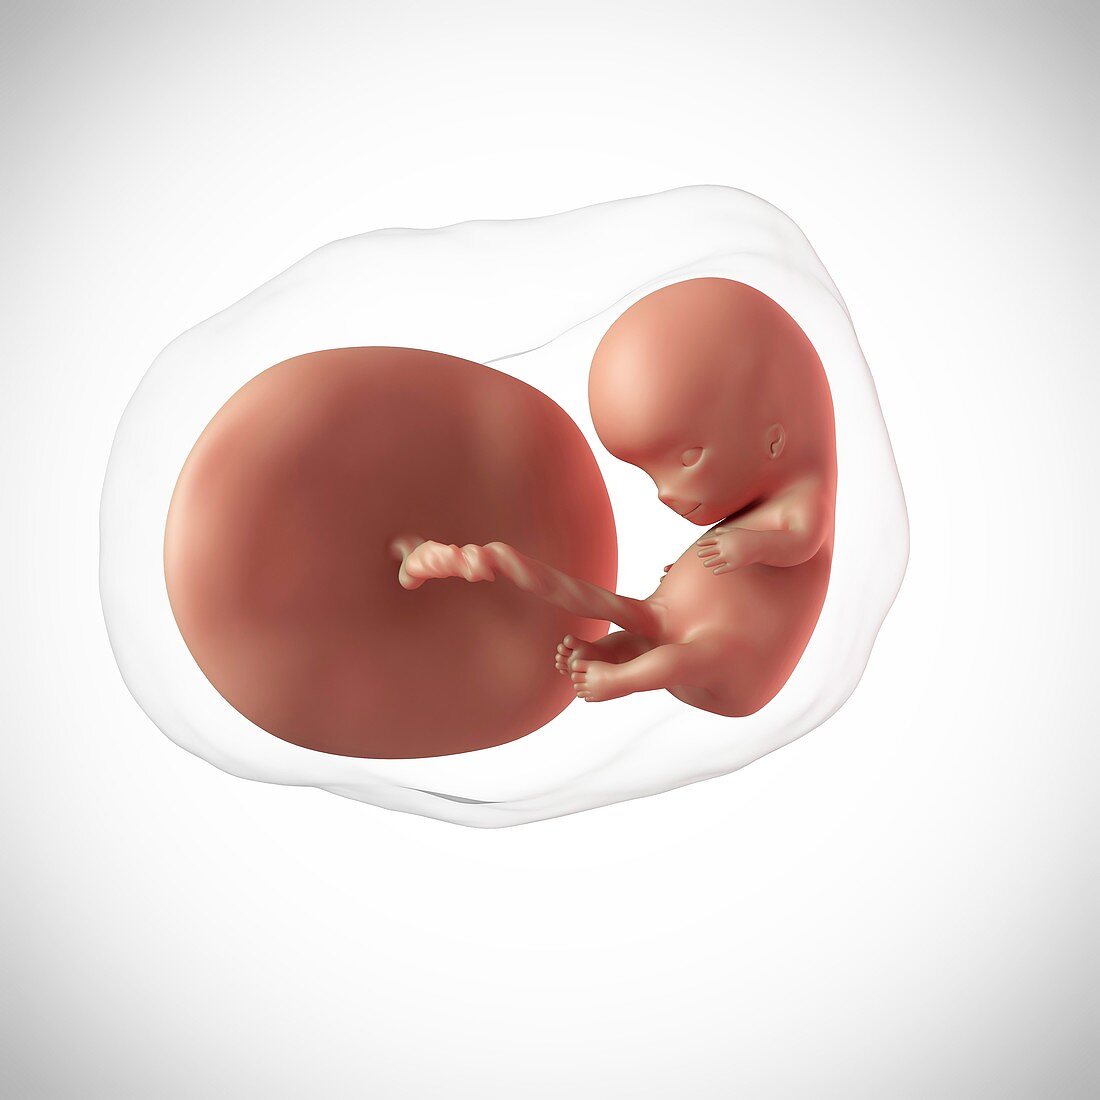 Human fetus age 10 weeks